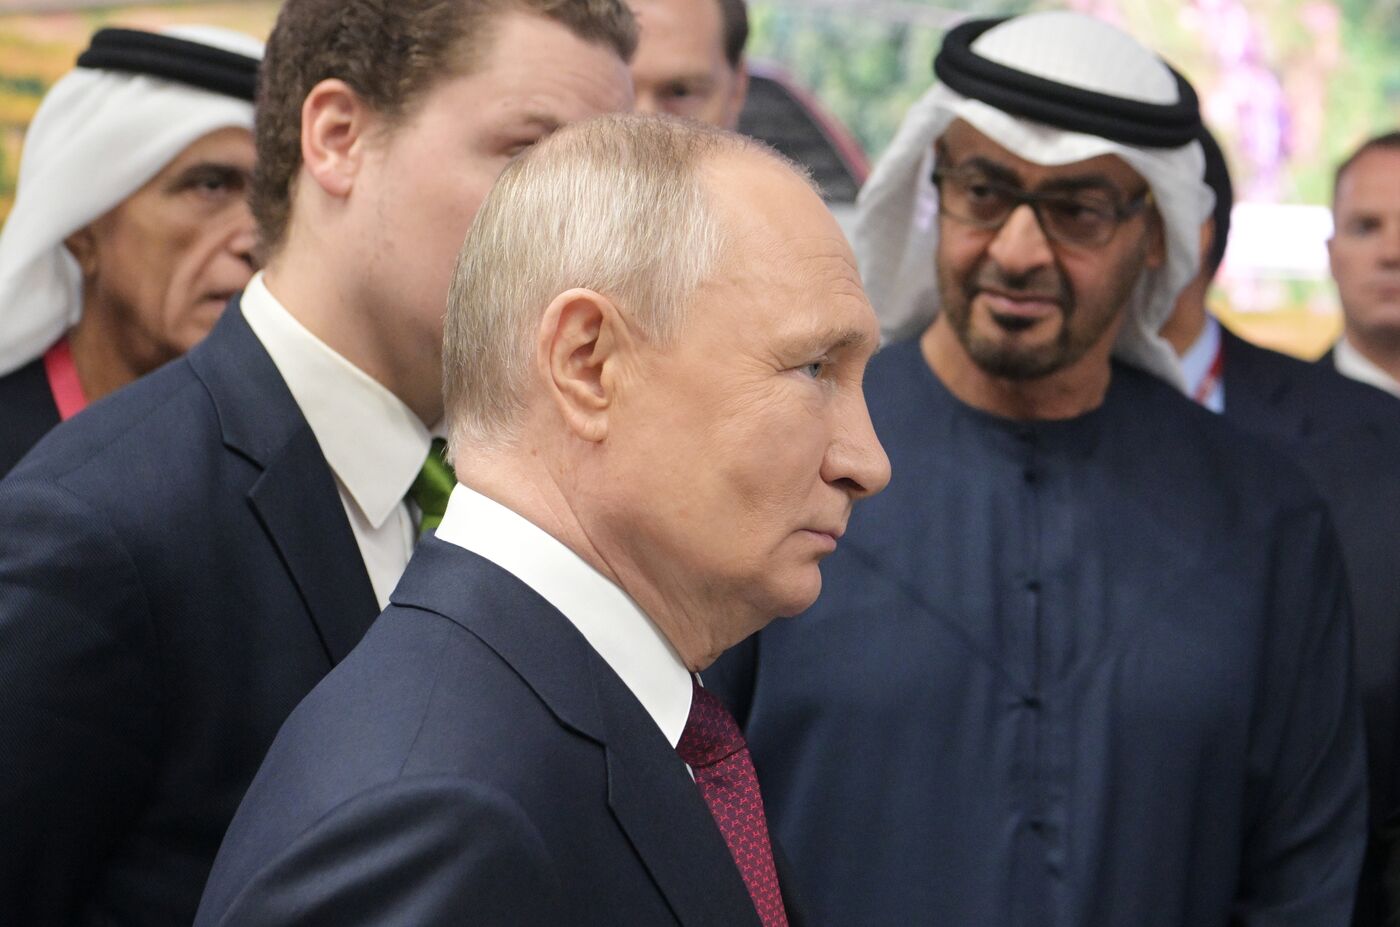 Президент РФ В. Путин принял участие в работе ПМЭФ-2023